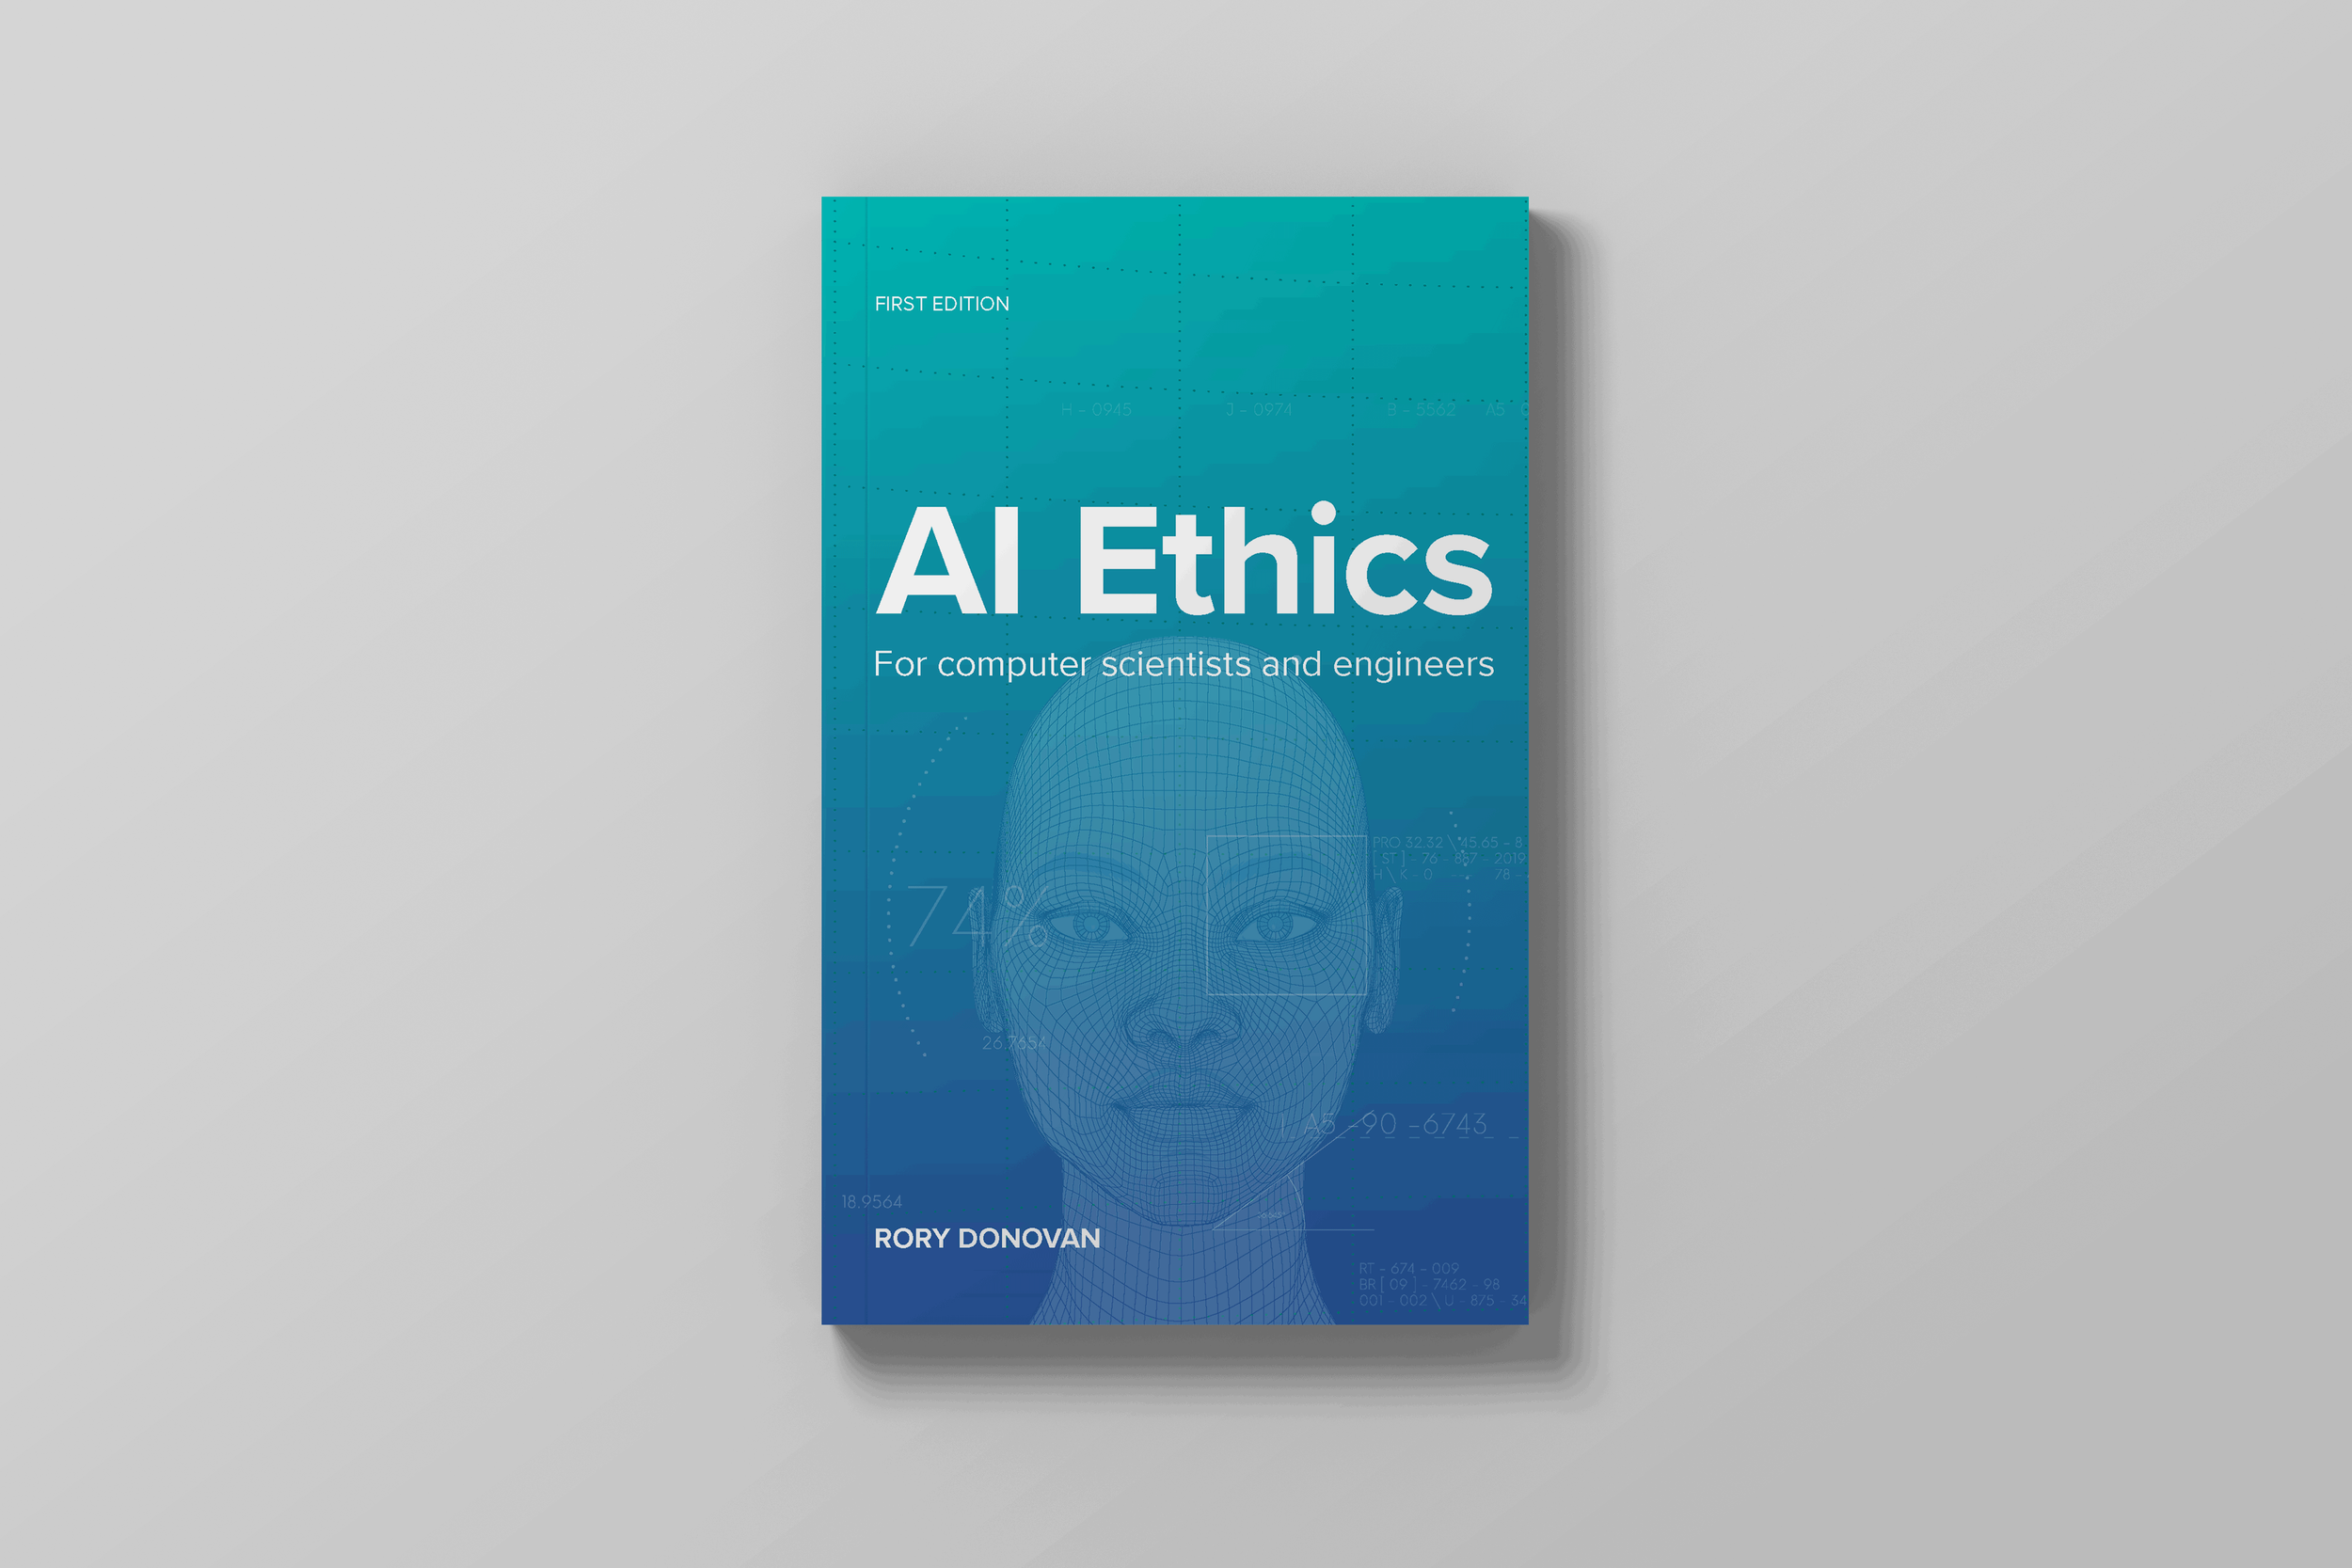 AI Ethics book cover design